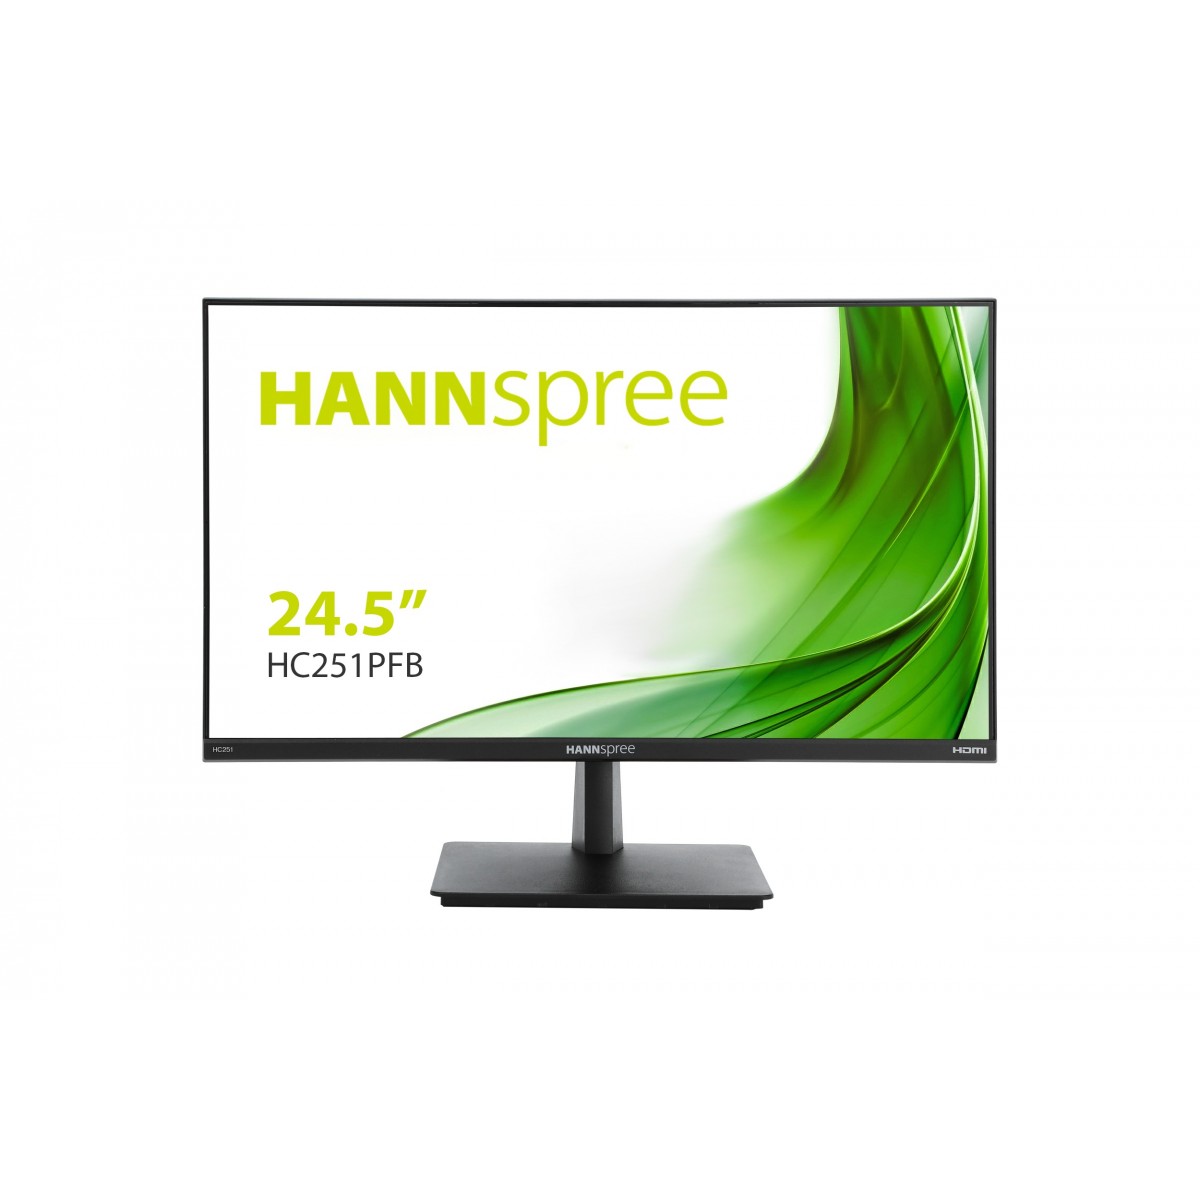 Hannspree 62,2cm (24,5) HC251PFB 16:9 HDMI+DP+VGA LED - Flat Screen - 62.2 cm